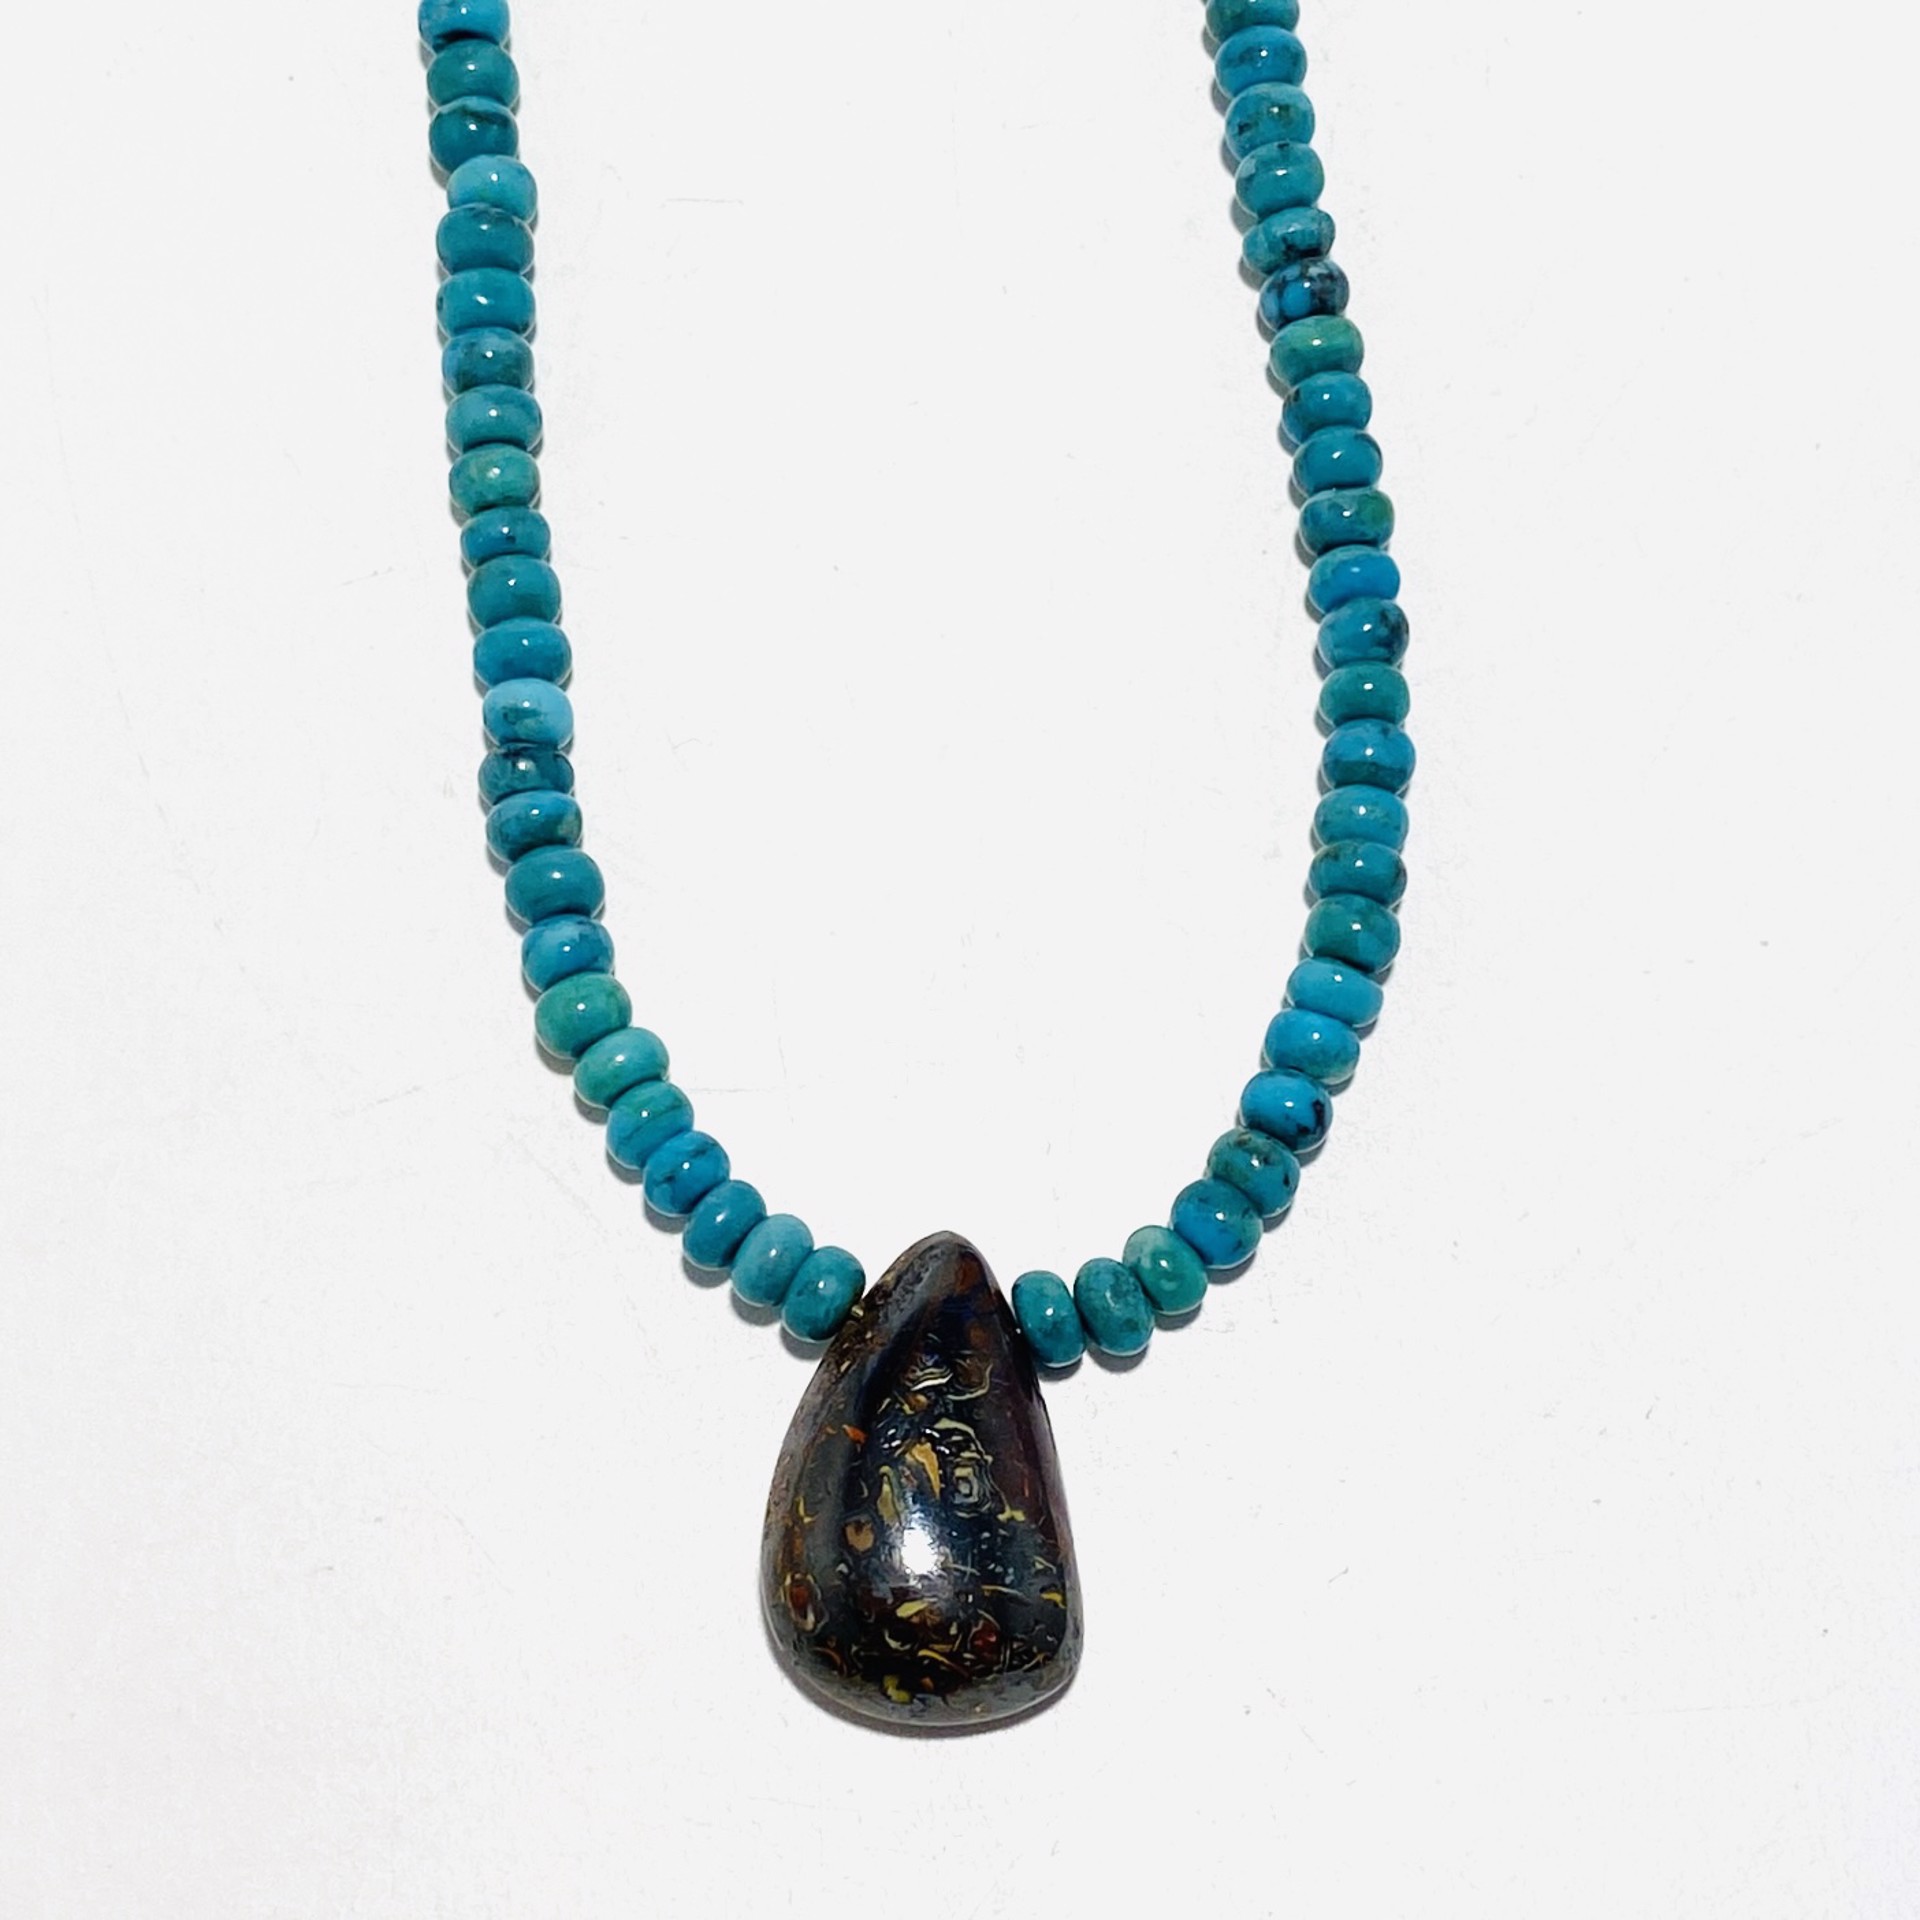 Turquoise Bead Necklace, Australian opal pendant by Nance Trueworthy